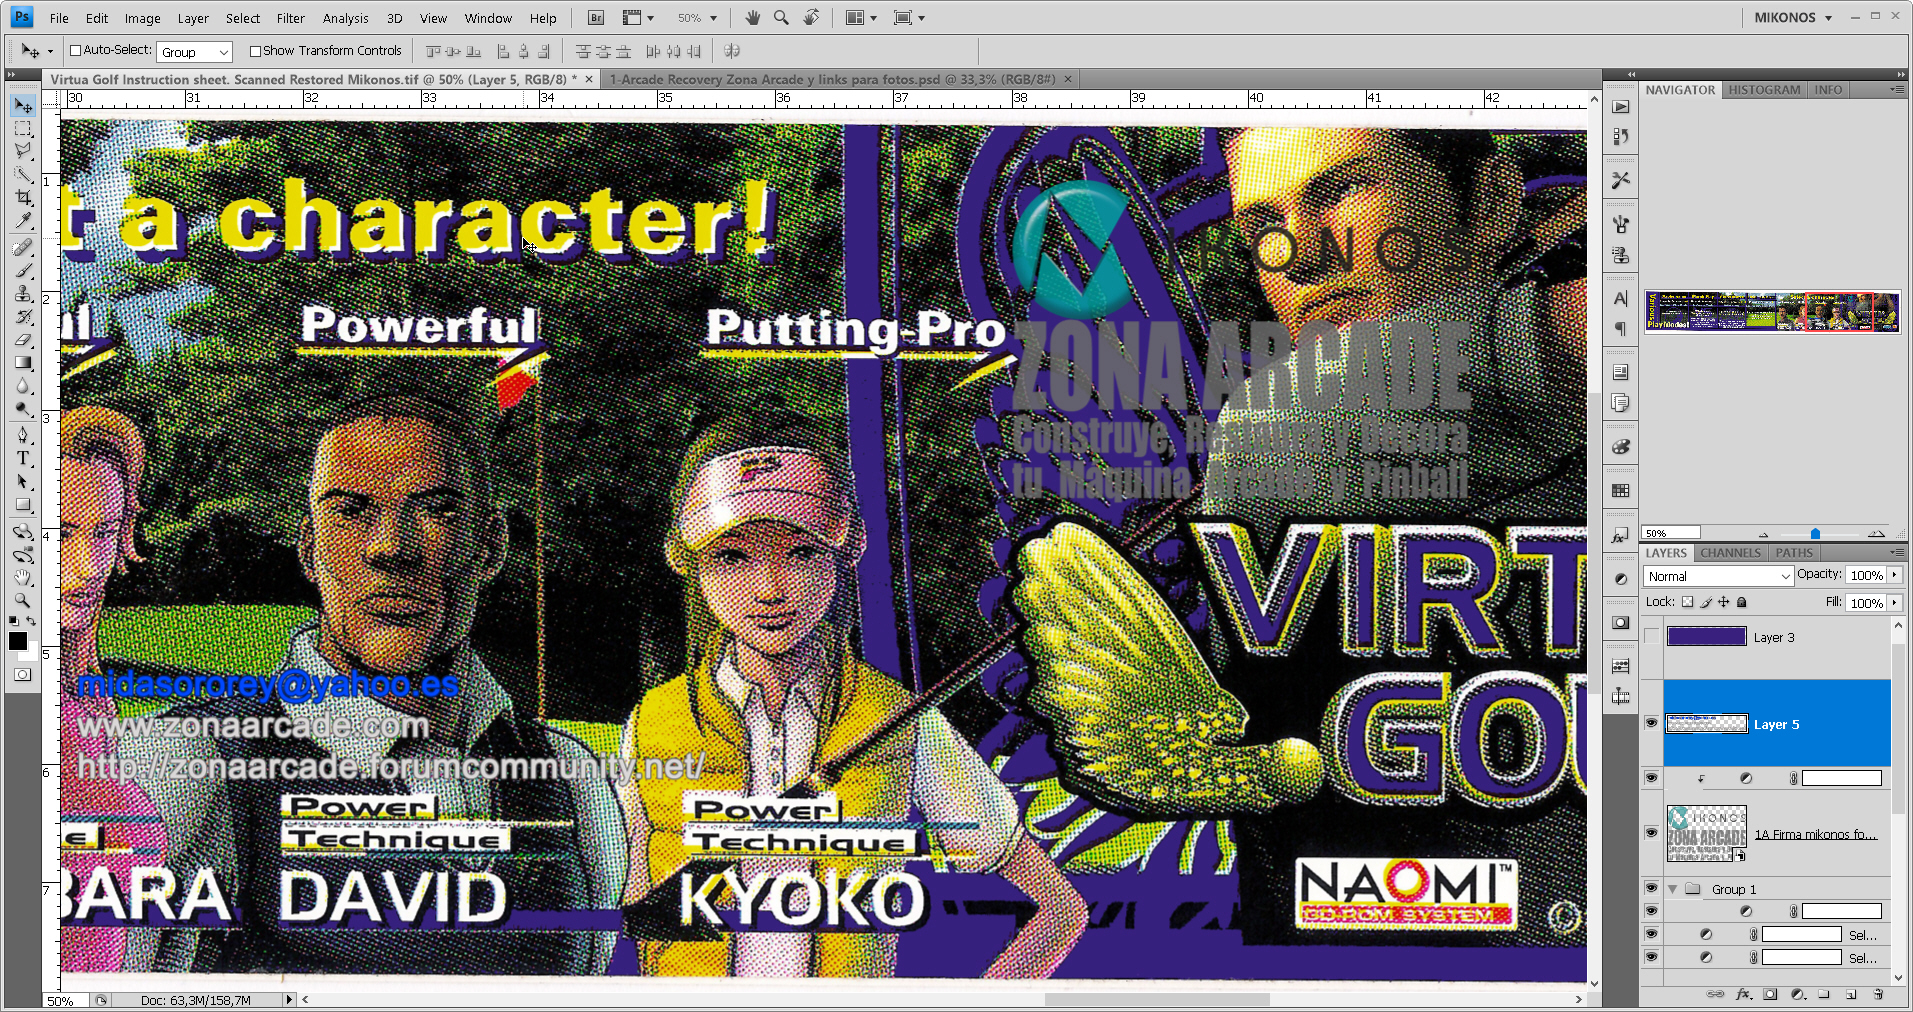 Virtua-Golf-Instruction-Sheet-eng-ver-Restored-Mikonos3